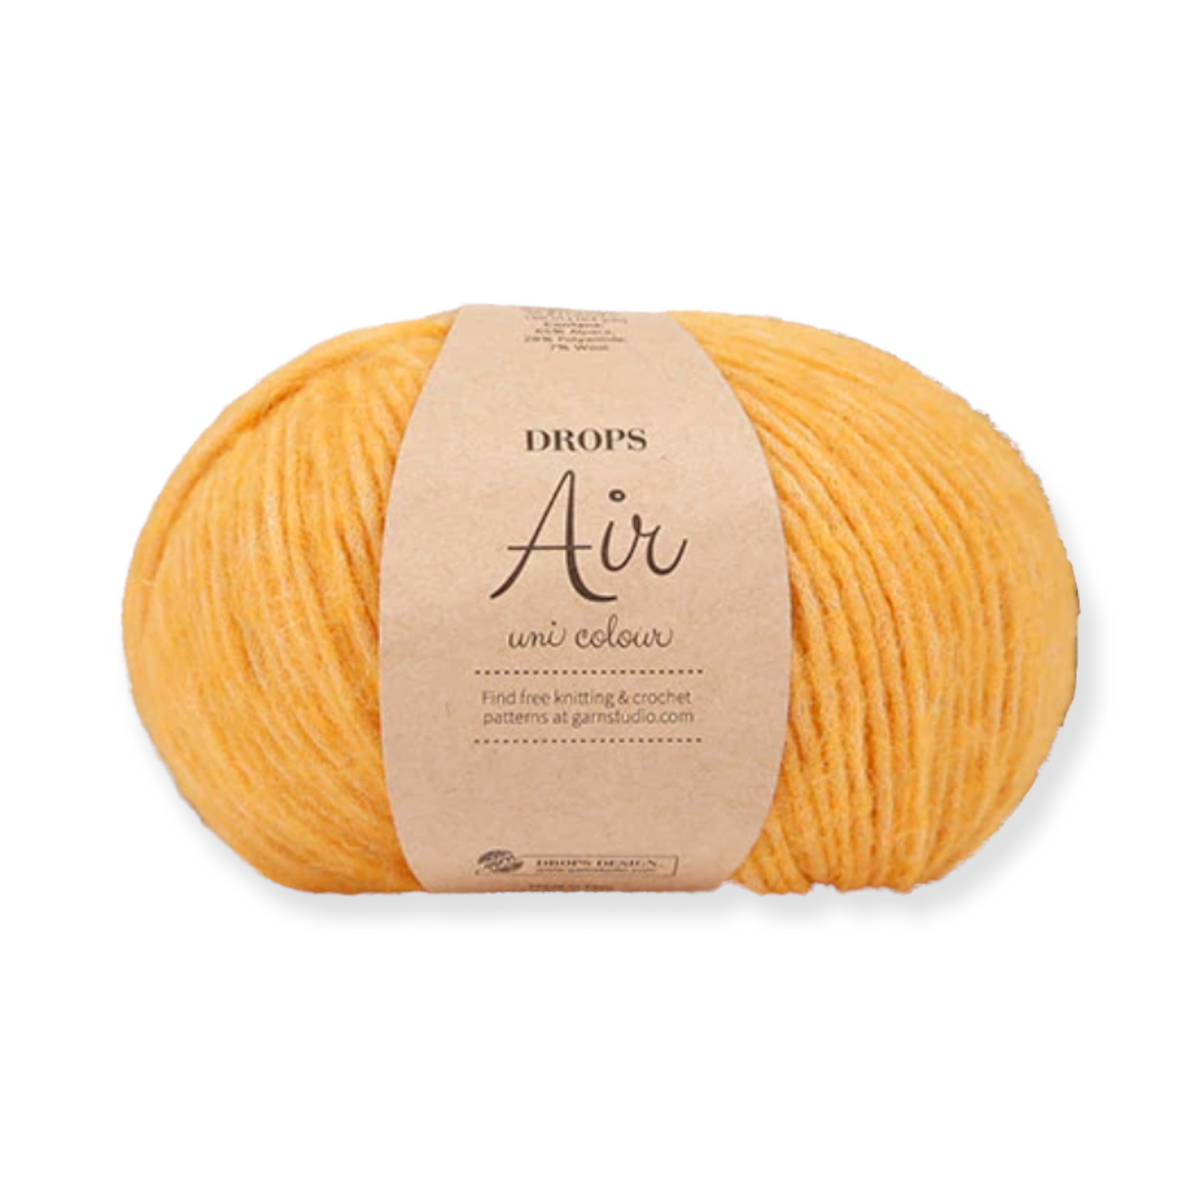 Drops Air - Sea Blue (21) - 50g - Wool Warehouse - Buy Yarn, Wool